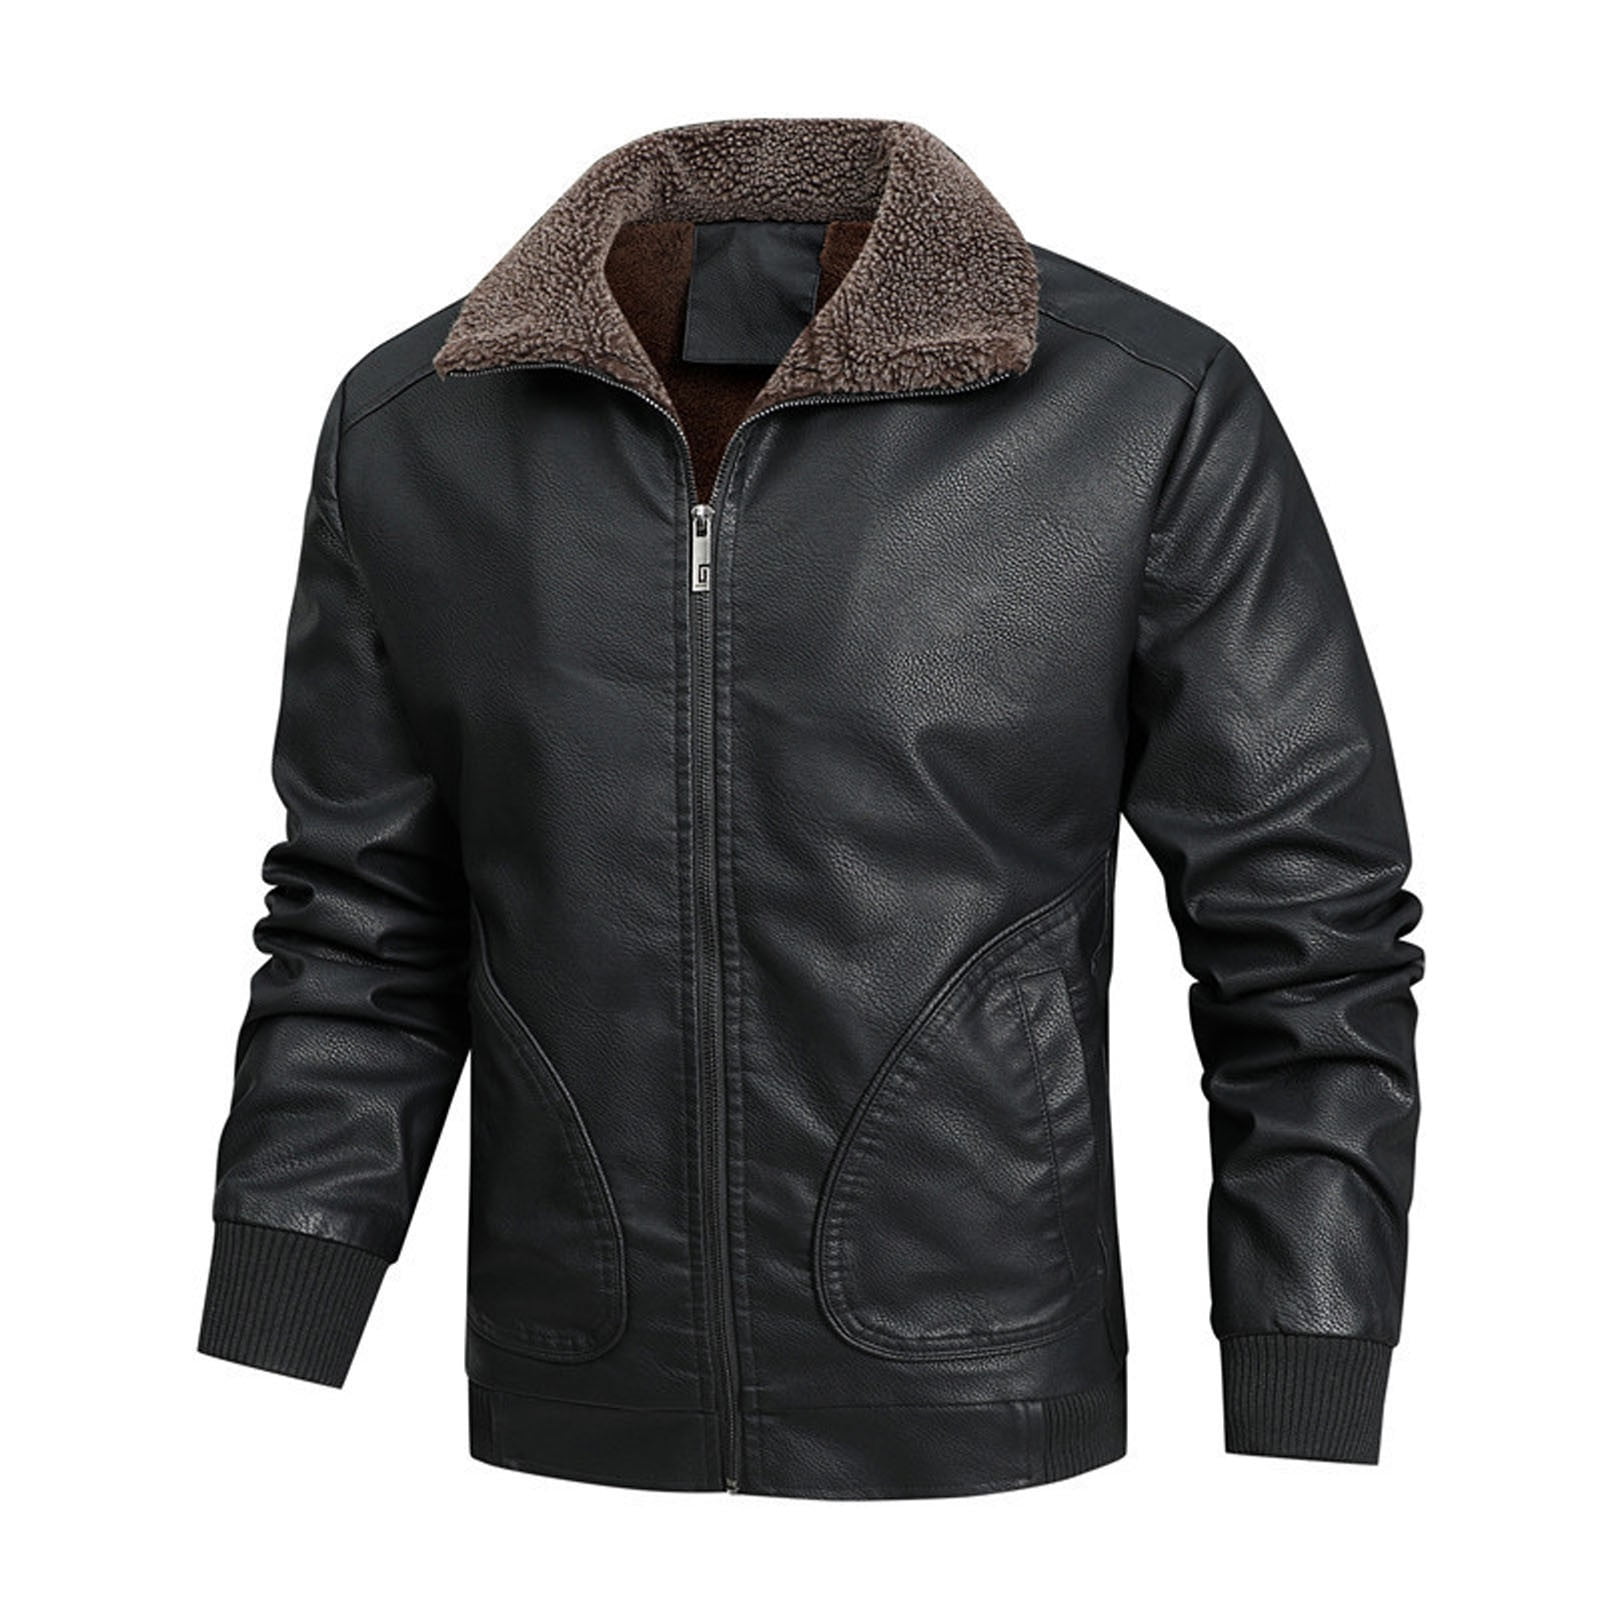 NARABB Men's Autumn Winter Long-sleeved Leather Motorcycle Jacket ...